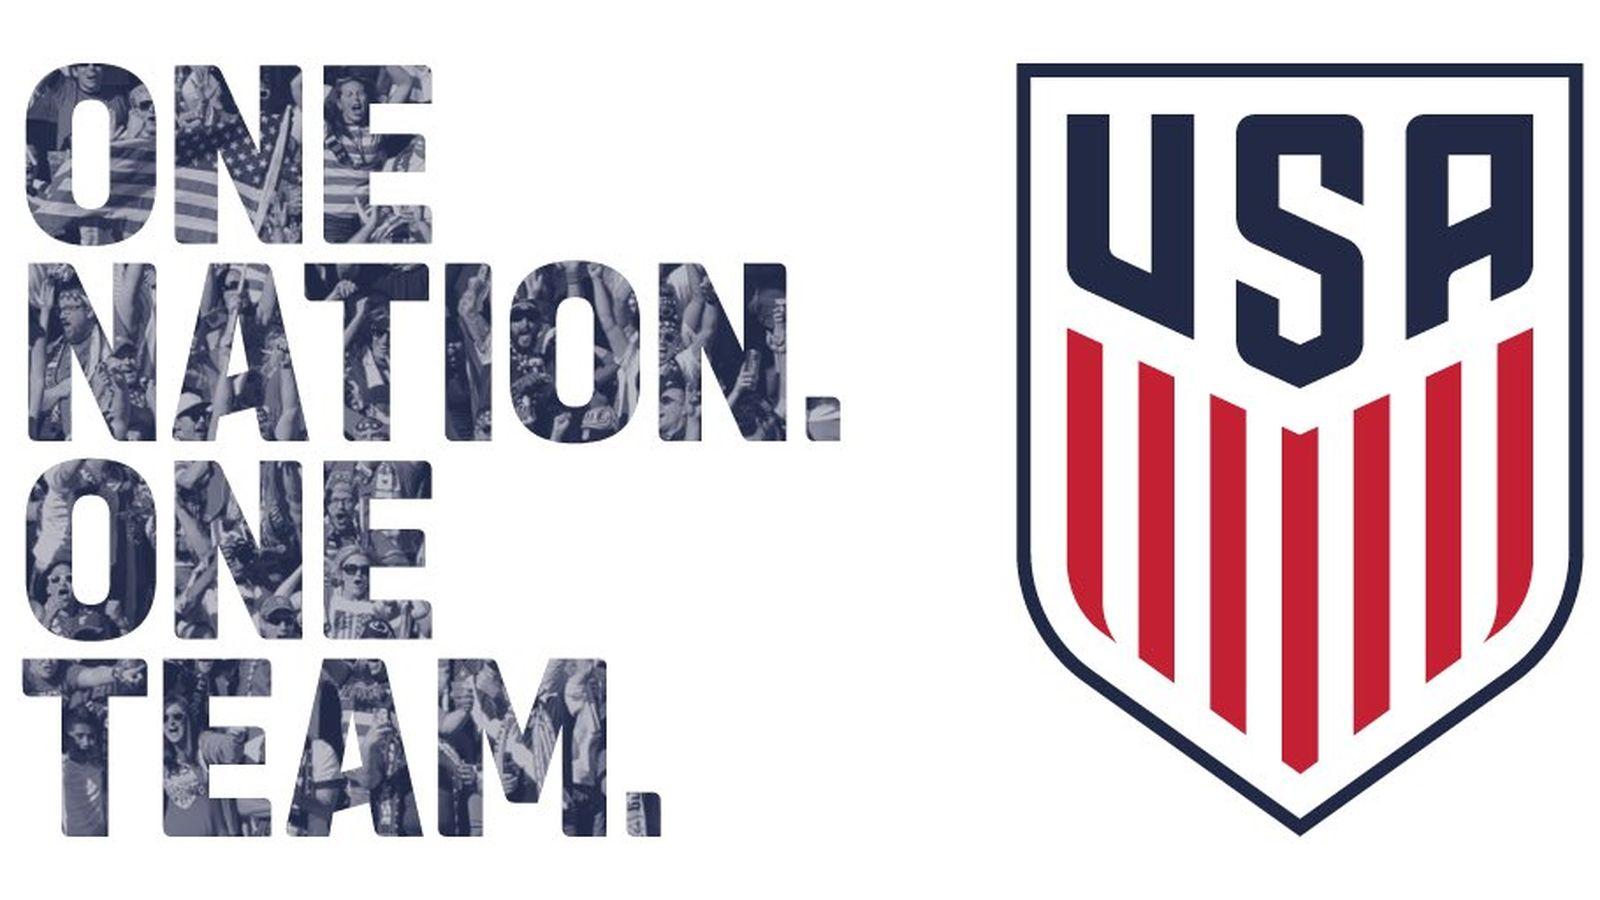 45 US Soccer Wallpapers   Download at WallpaperBro